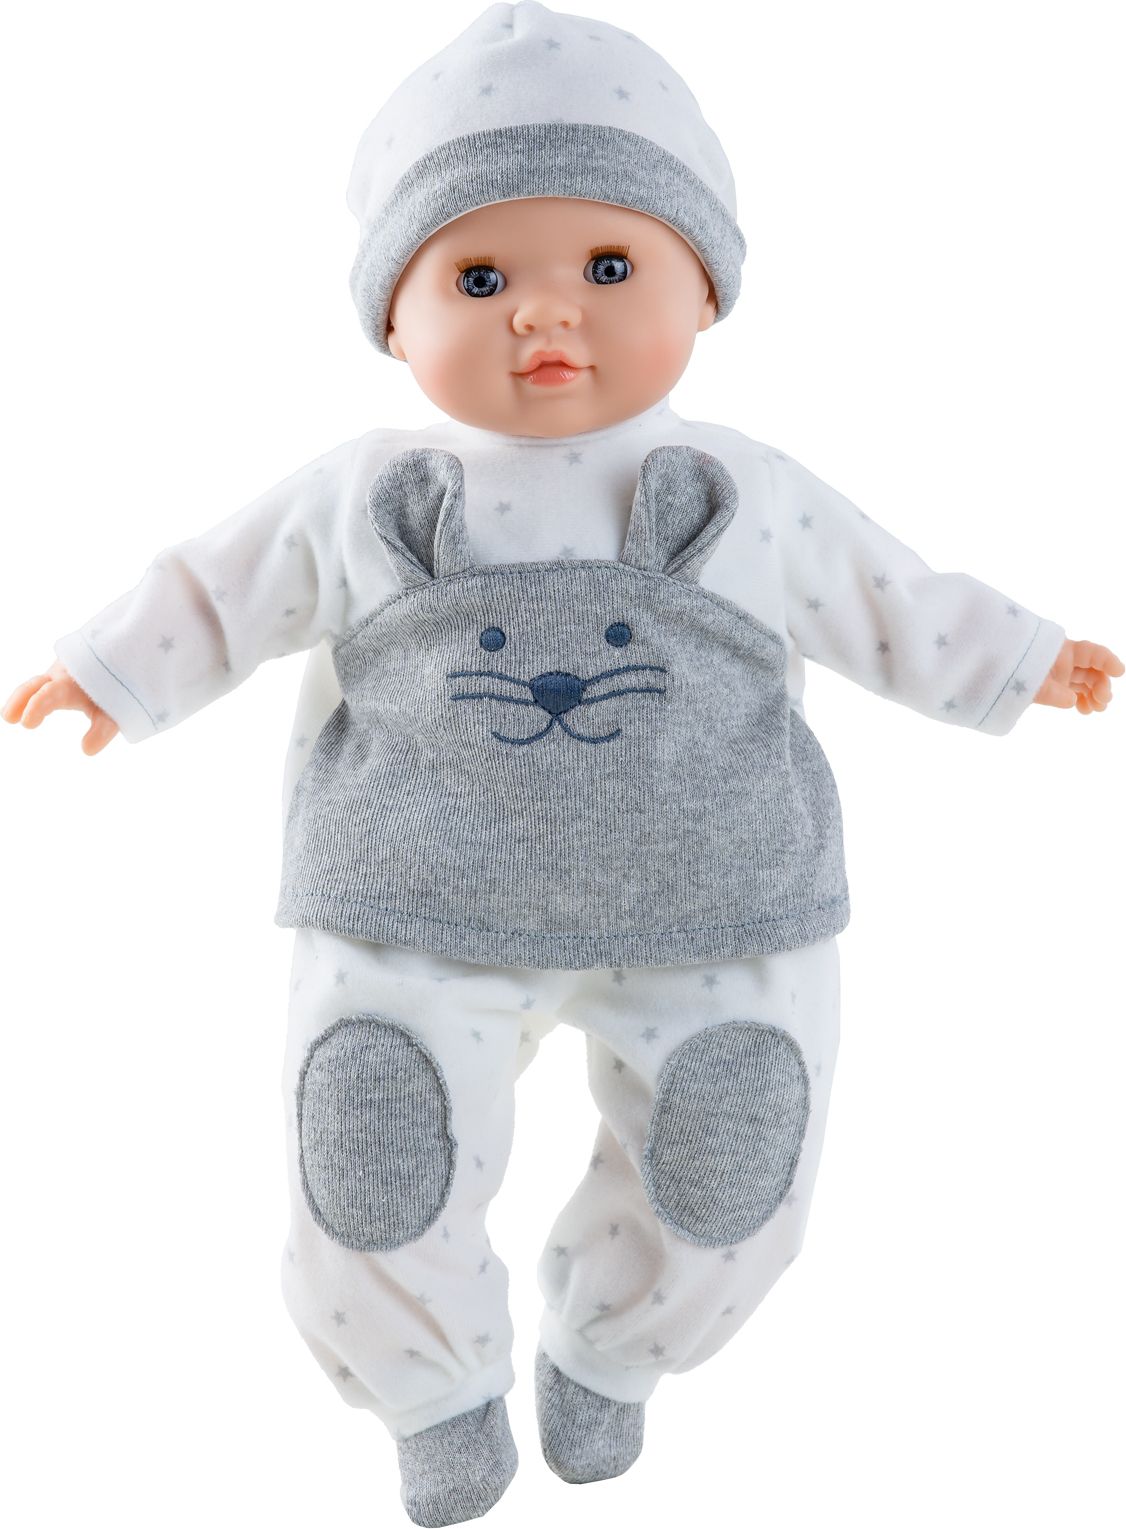 Realistické miminko - chlapeček Julius 2019 od firmy Paola Reina - obrázek 1